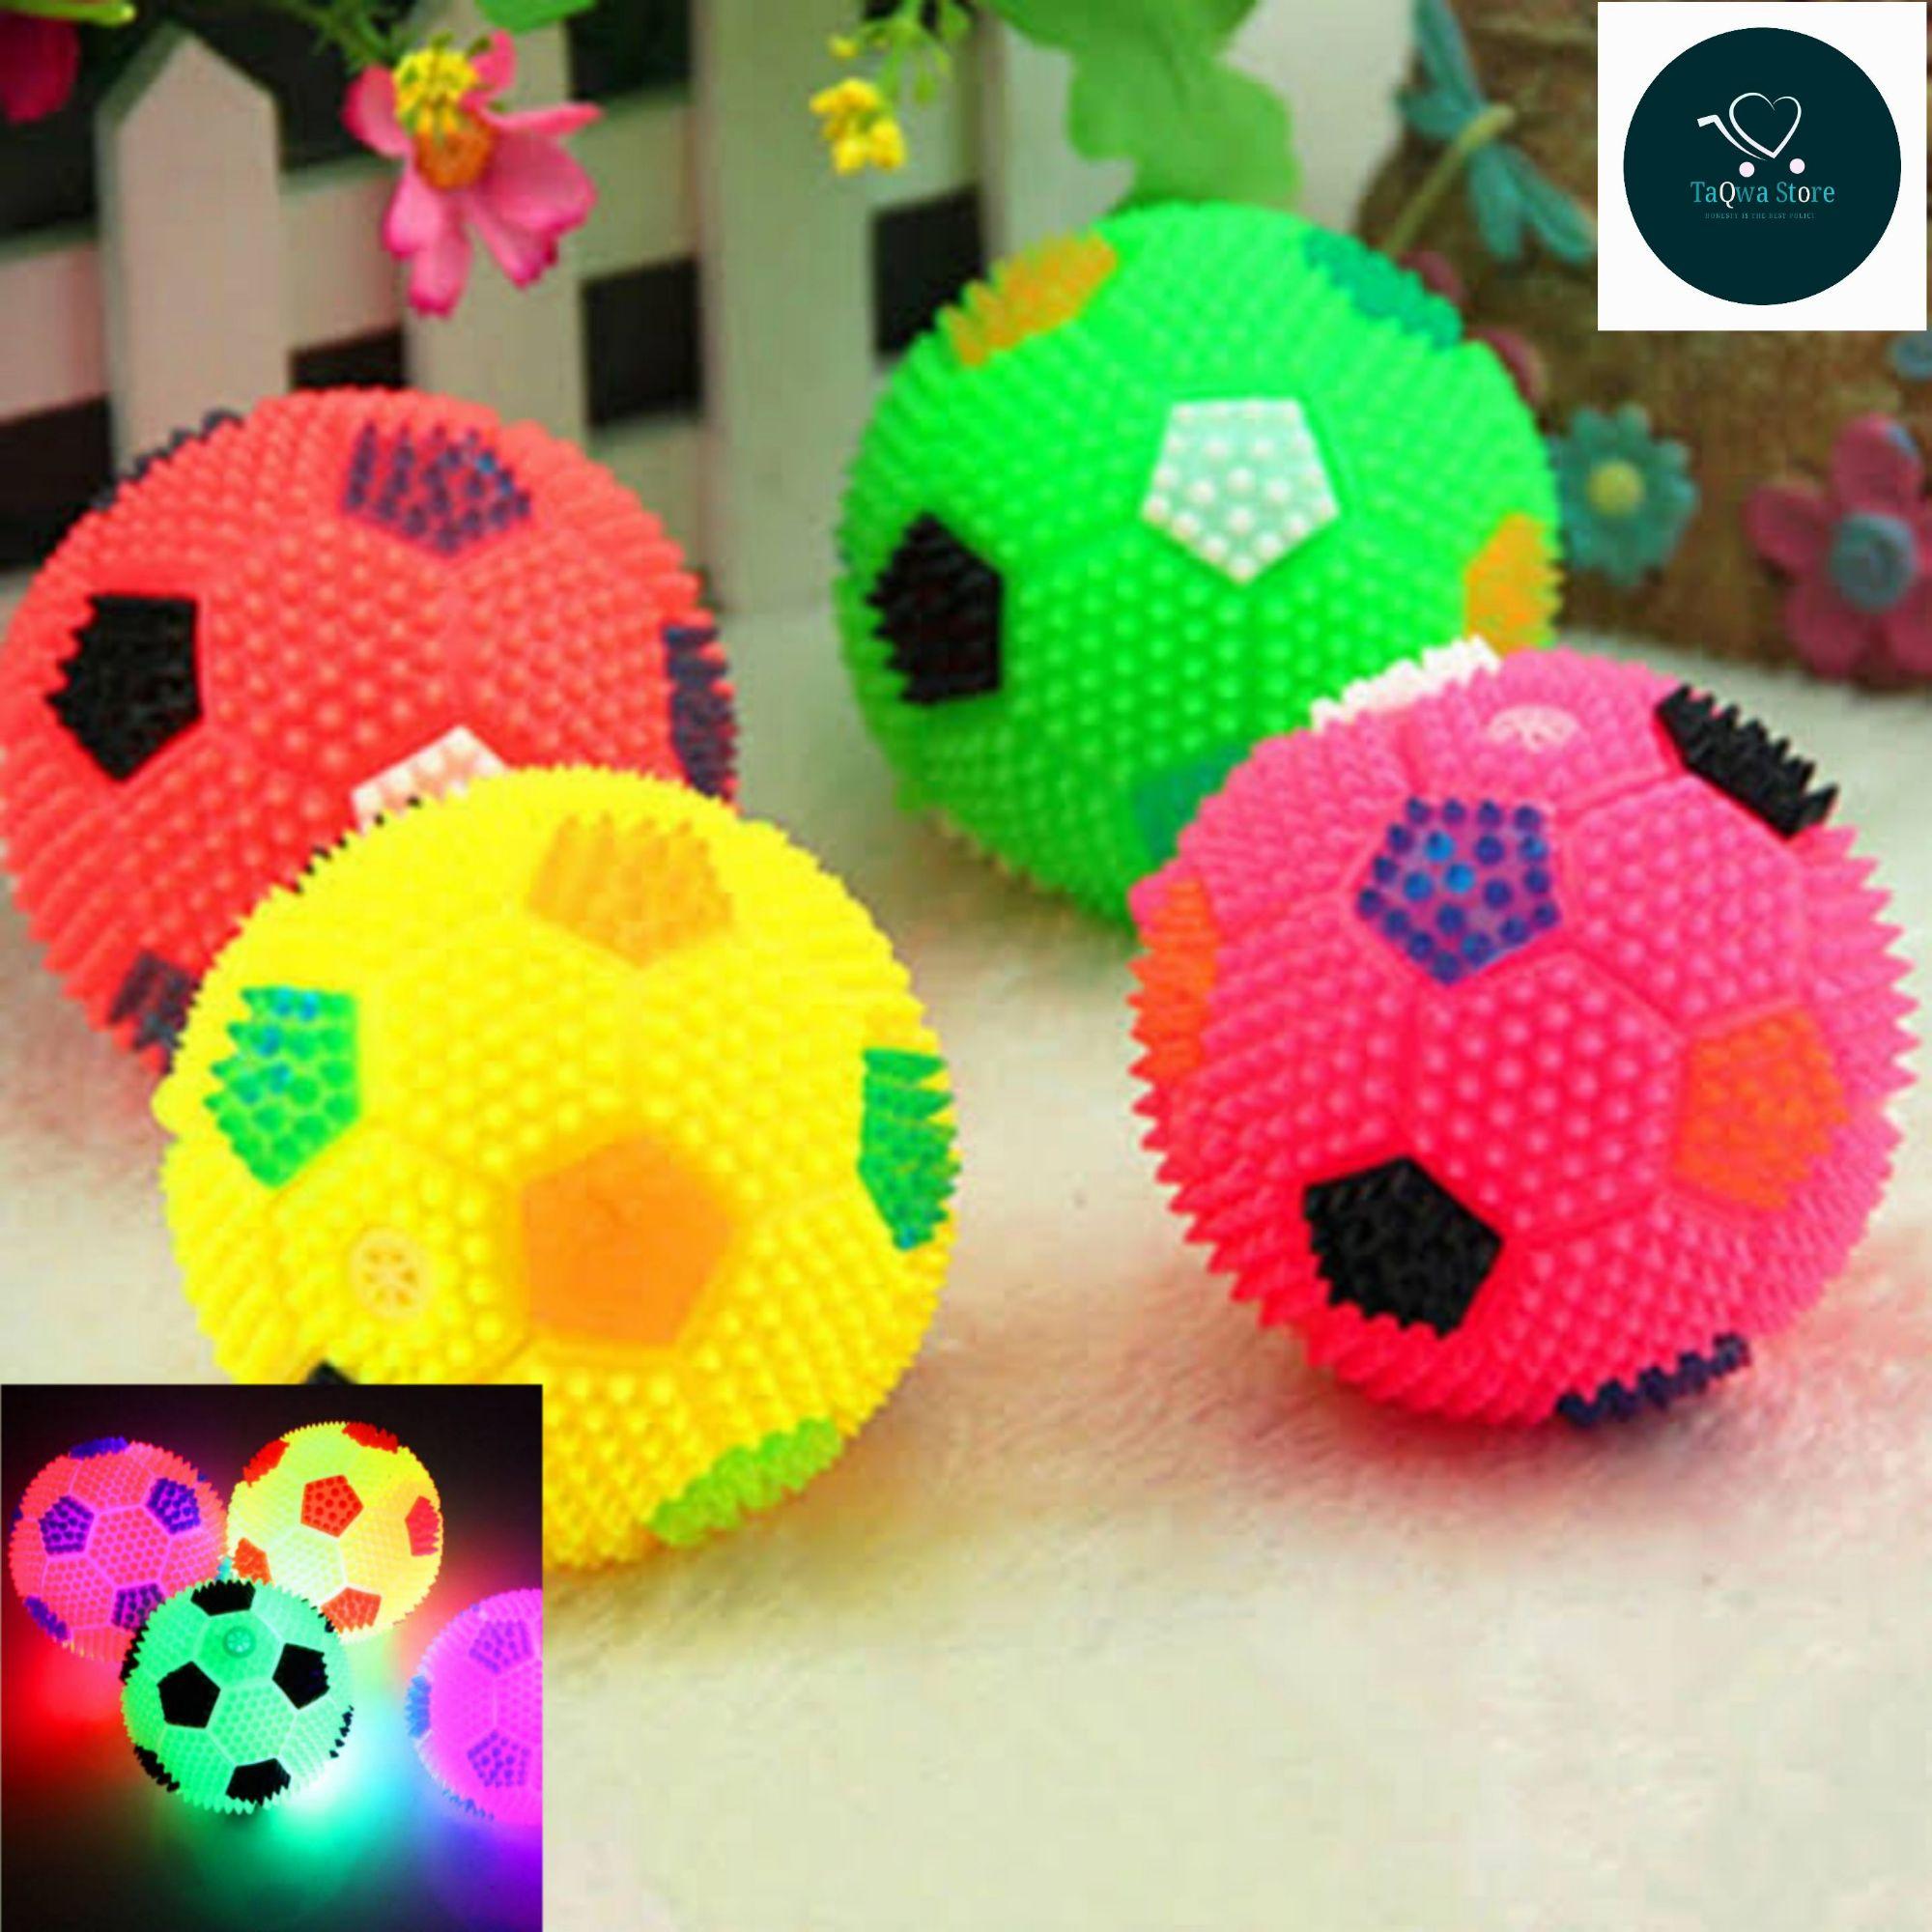 Cute 3D lightin and soft ball for kids